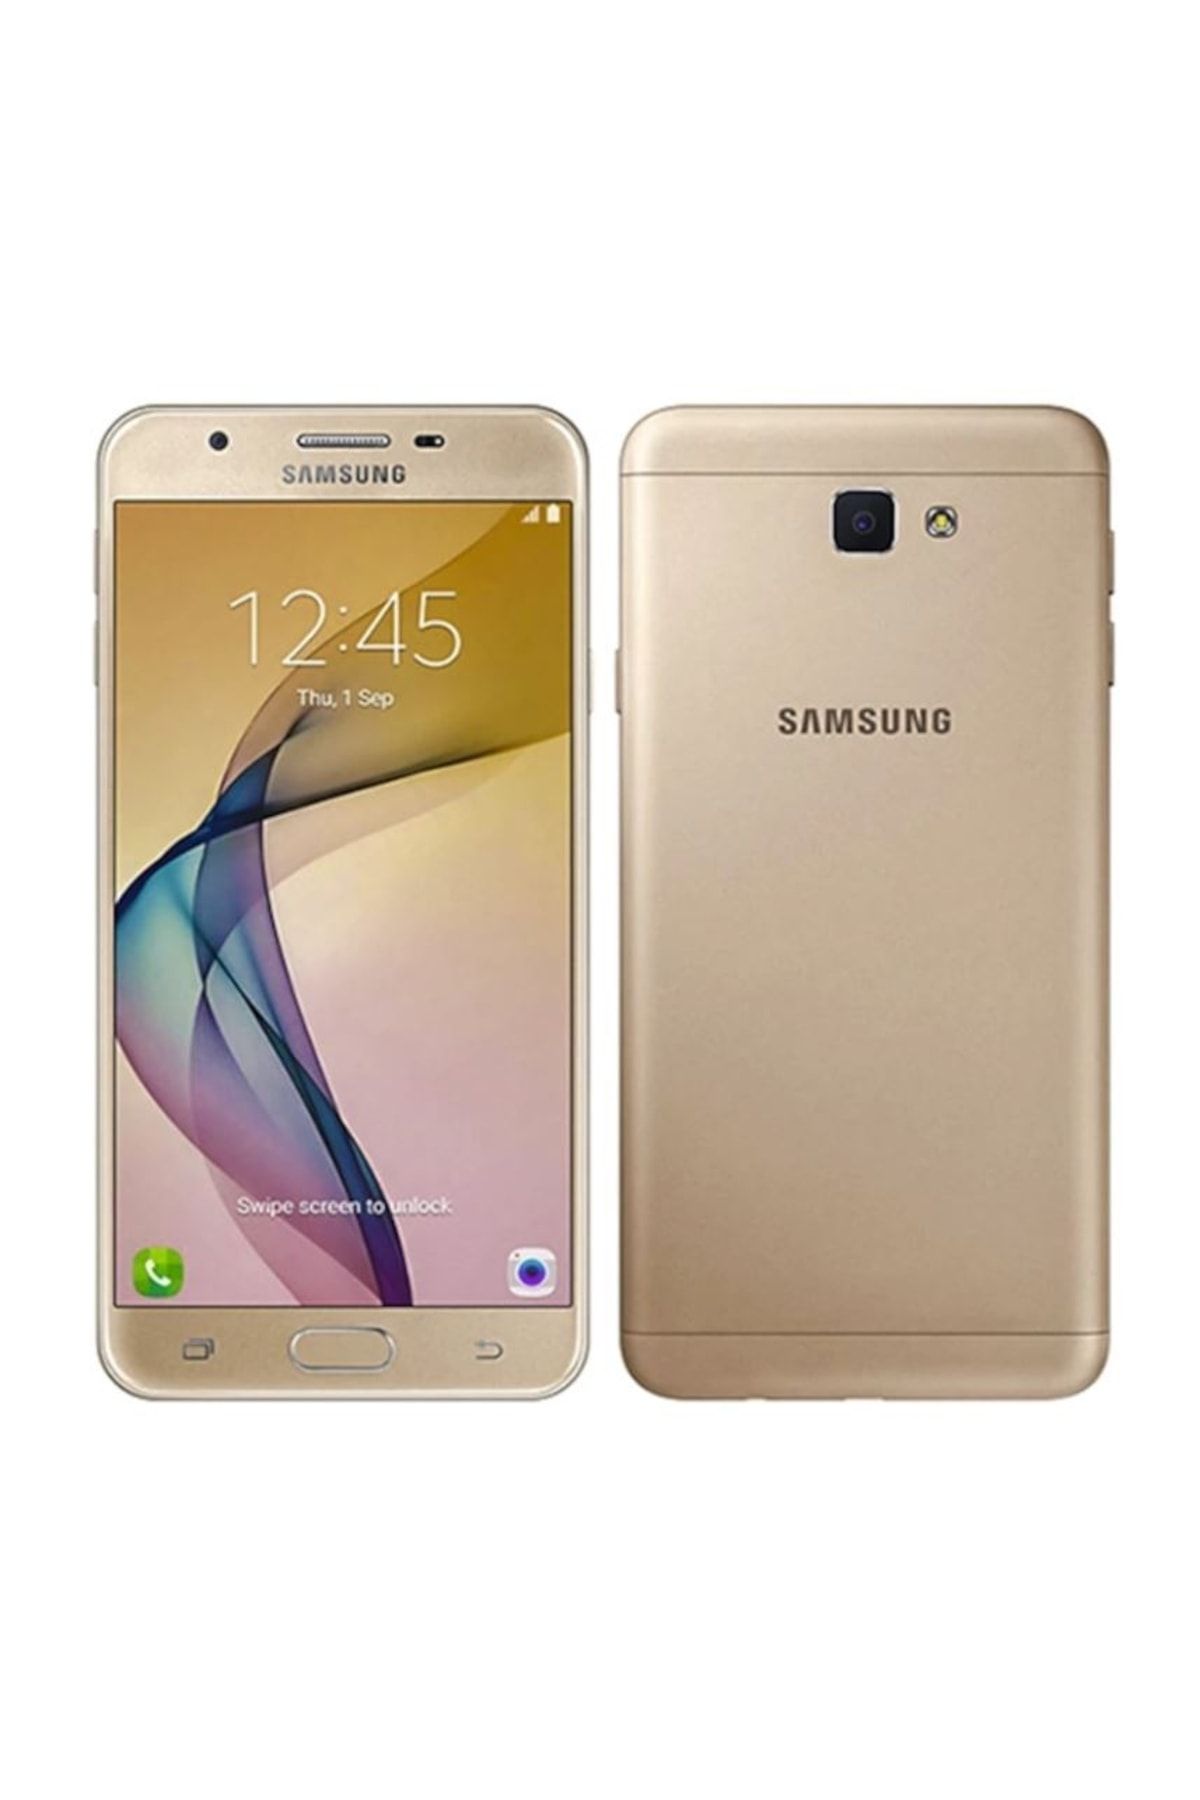 Samsung Galaxy J7 (2016) Smartphone Review - NotebookCheck.net Reviews